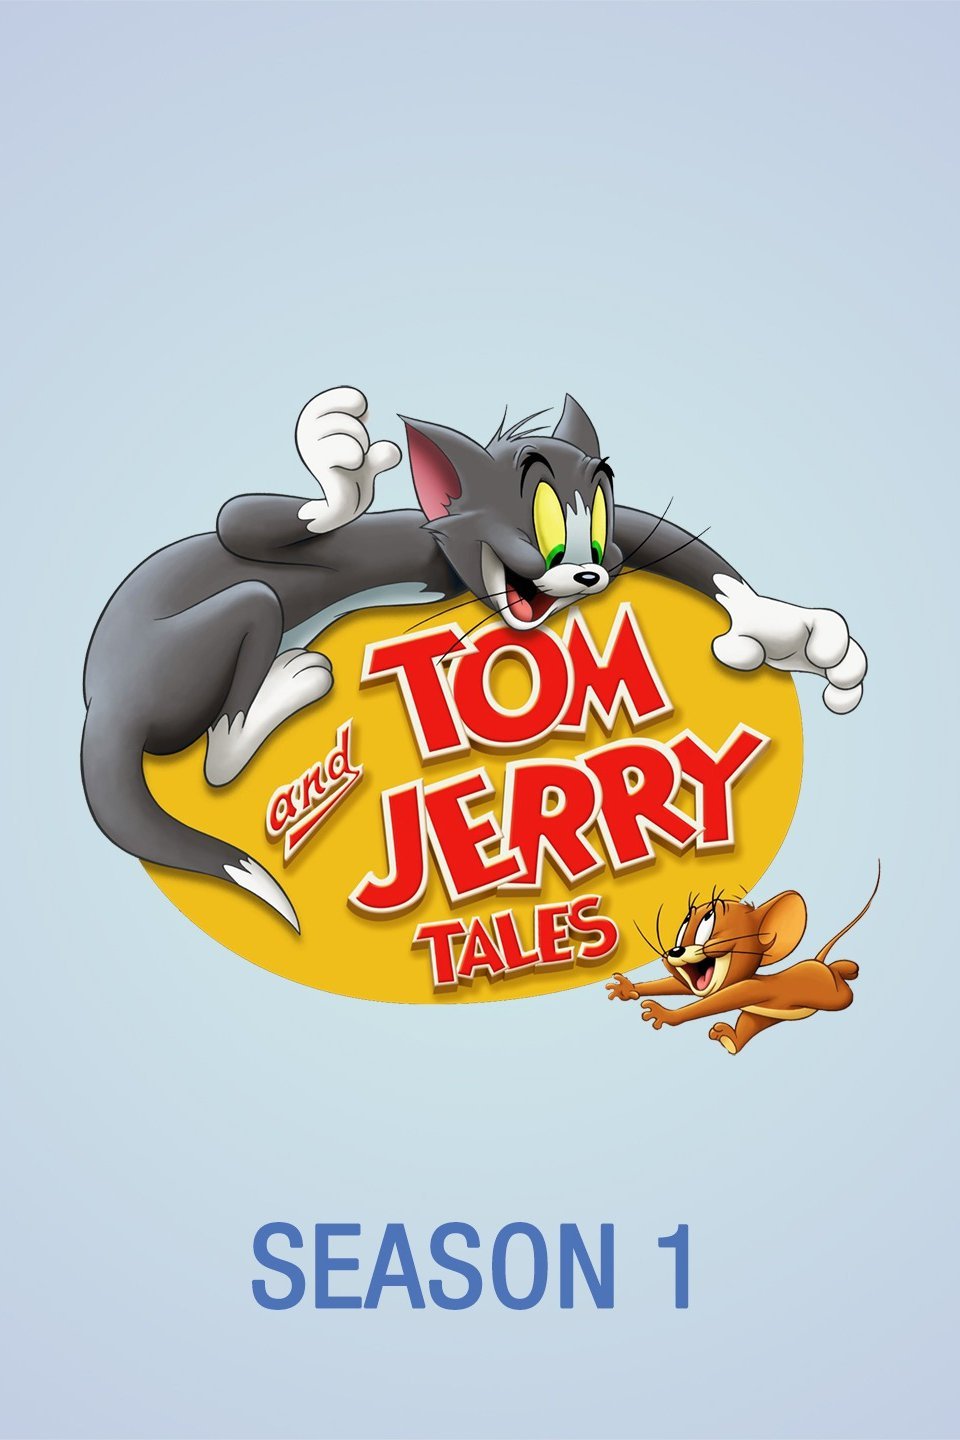 Tom jerry cartoon full episodes - inputclimate